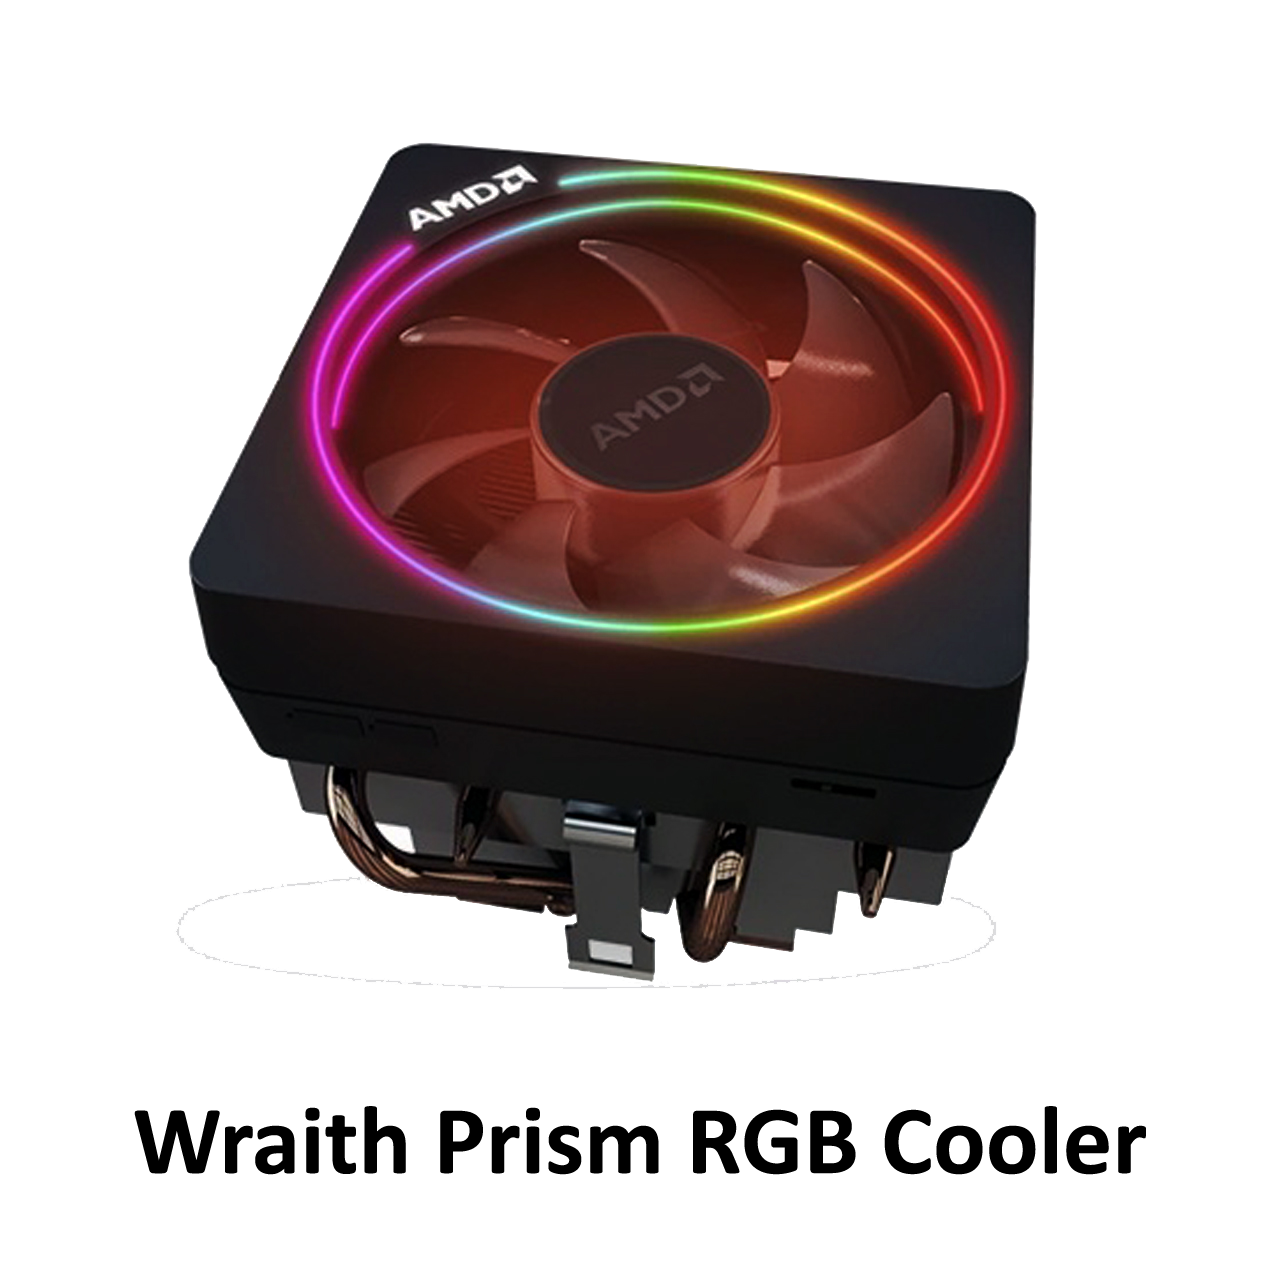 AMD Ryzen 7 3700X Processor With Wraith Prism Cooler (3Y)